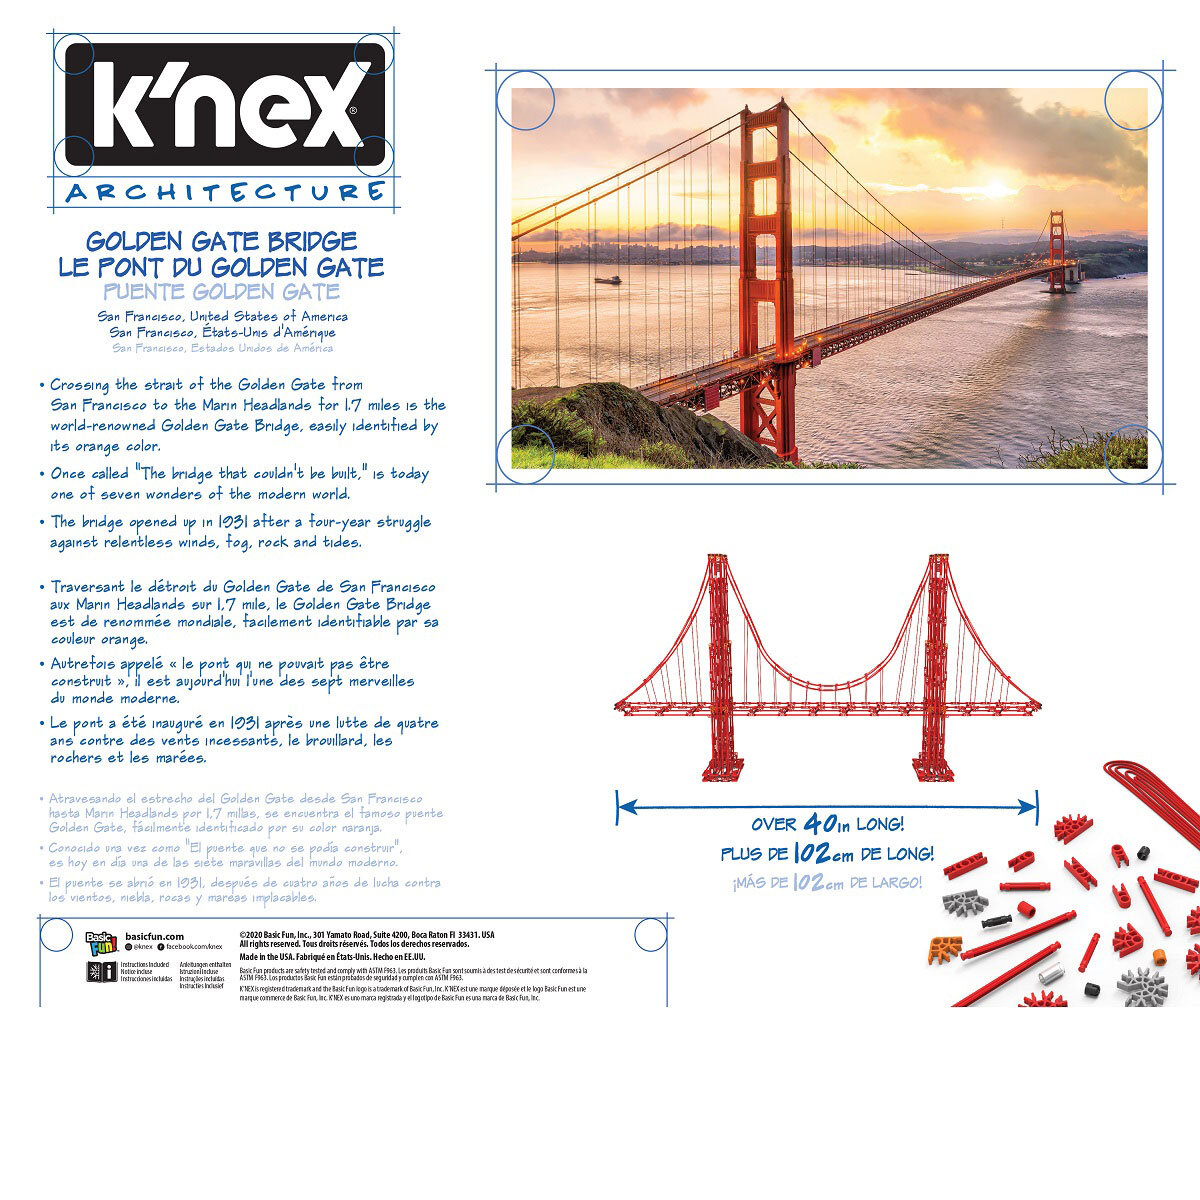 Buy K'nex Golden Gate Bridge Back of Box Image at Costco.co.uk